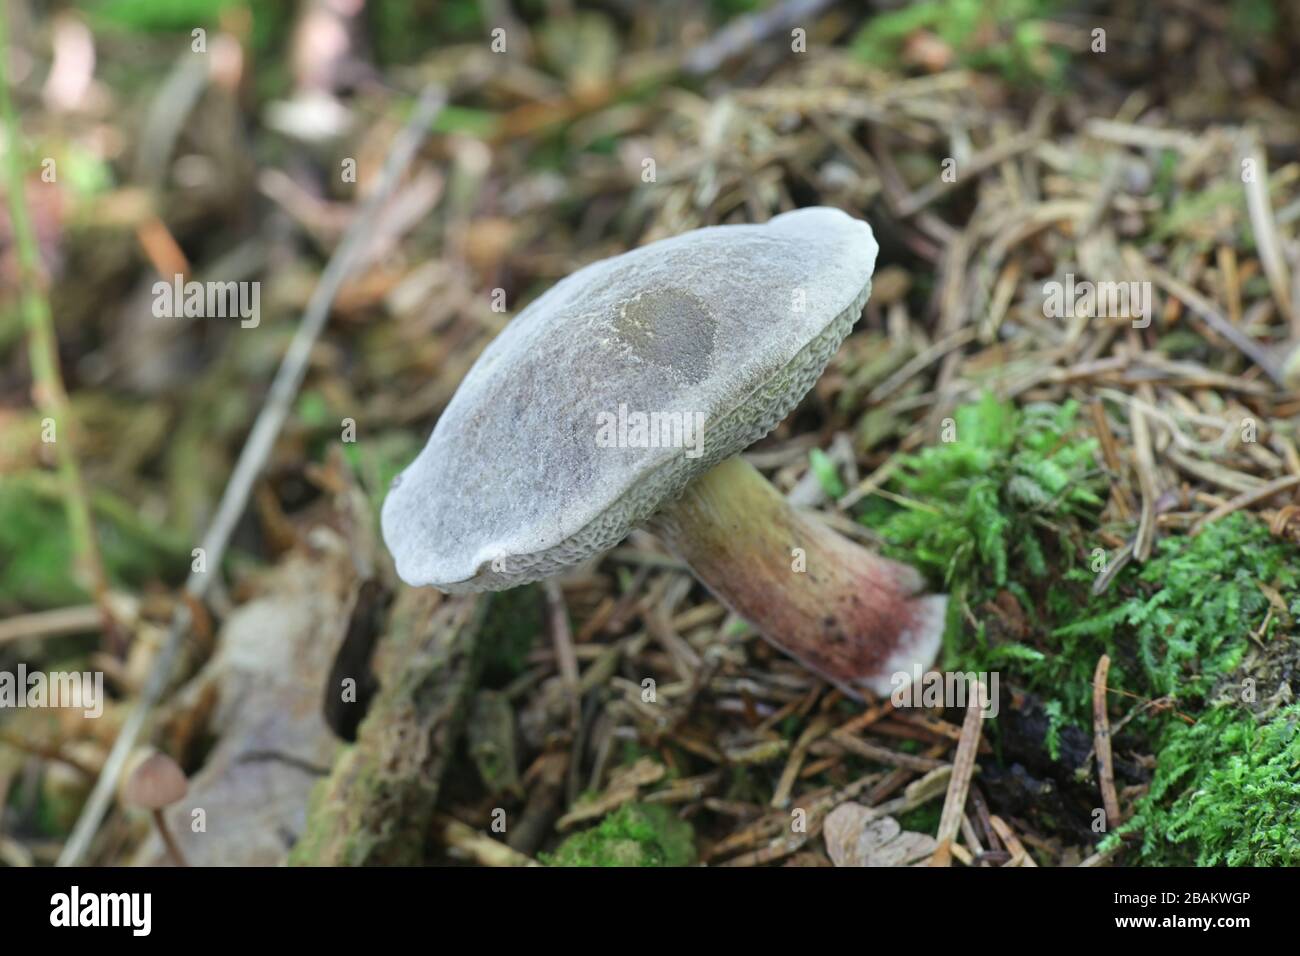 Xerocomus subtomentosus, known as suede bolete, brown and yellow bolet, boring brown bolete or yellow-cracked bolete, wild mushroom from Finland Stock Photo